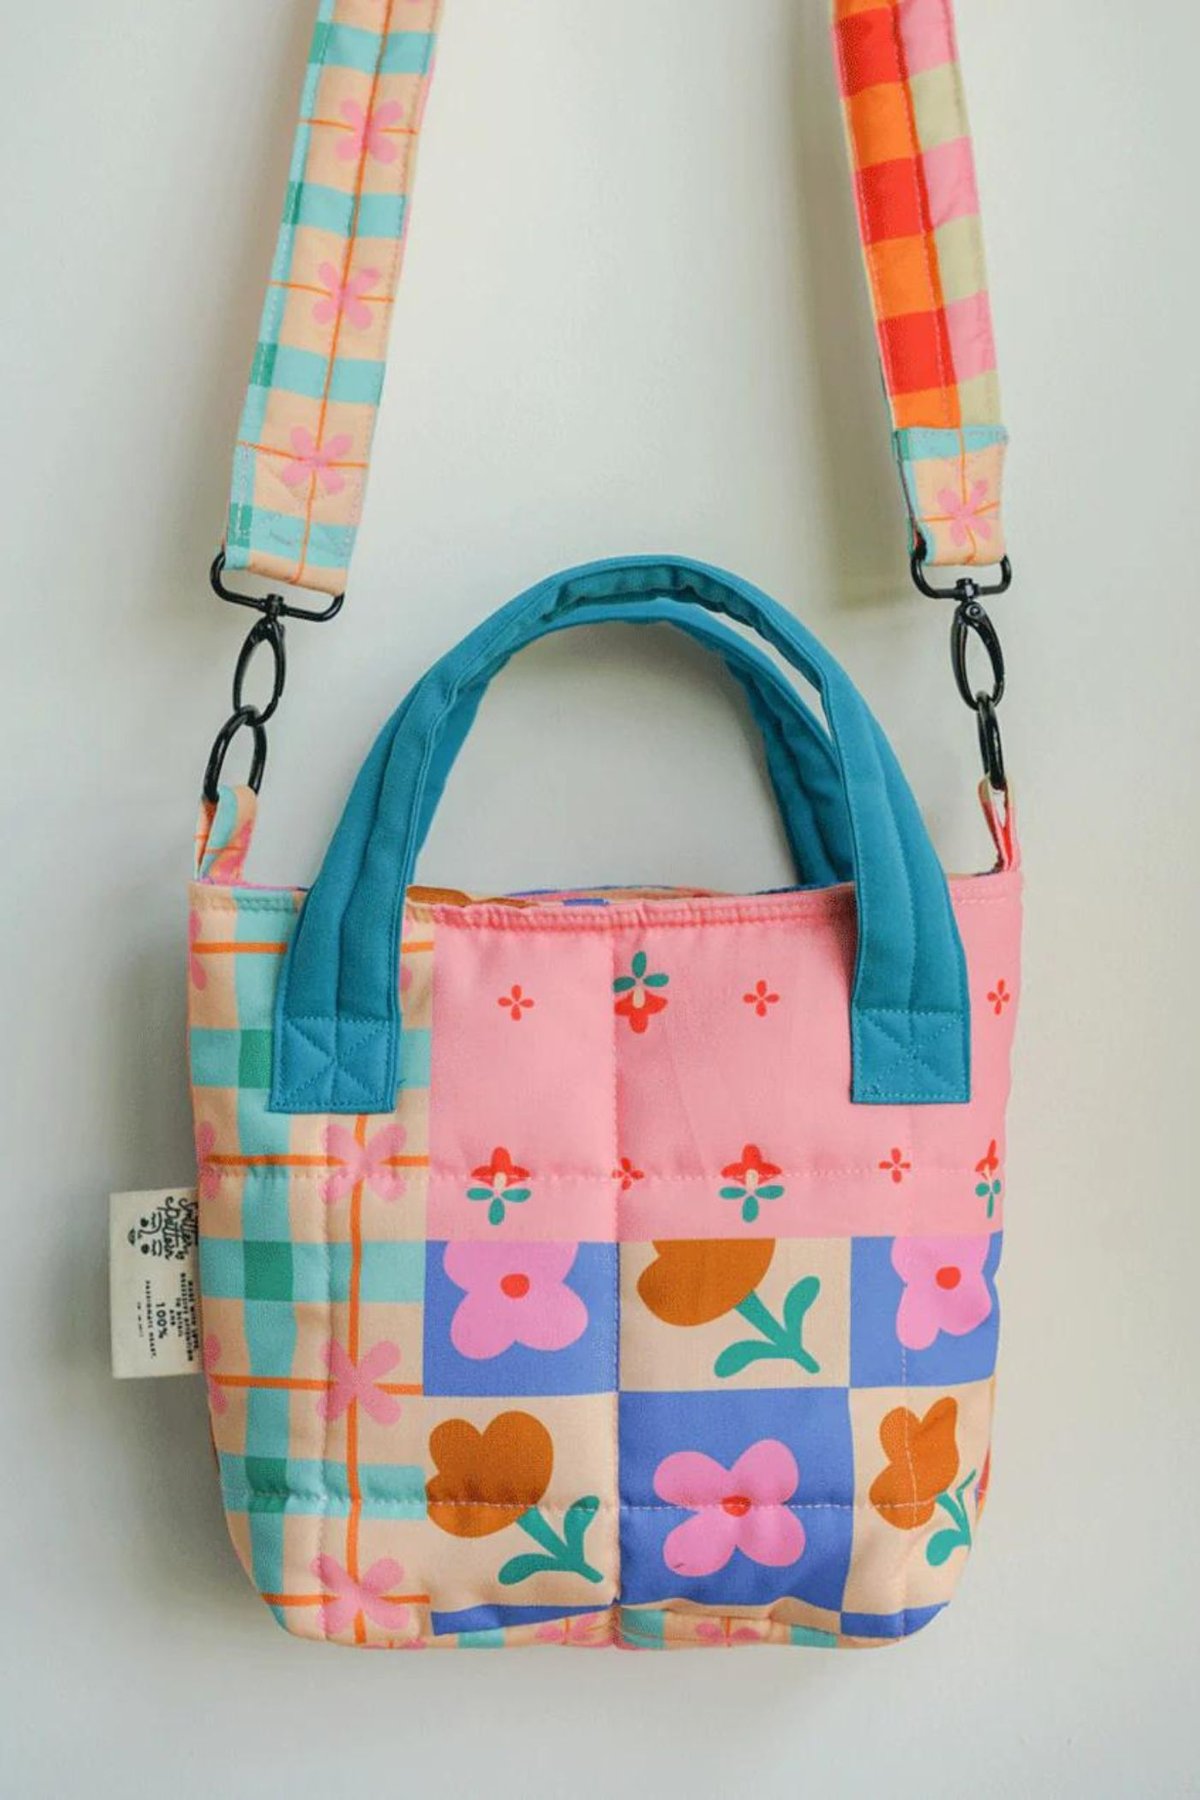 Smitten By Pattern (Mini Marshmallow Bag - Flower Brick)